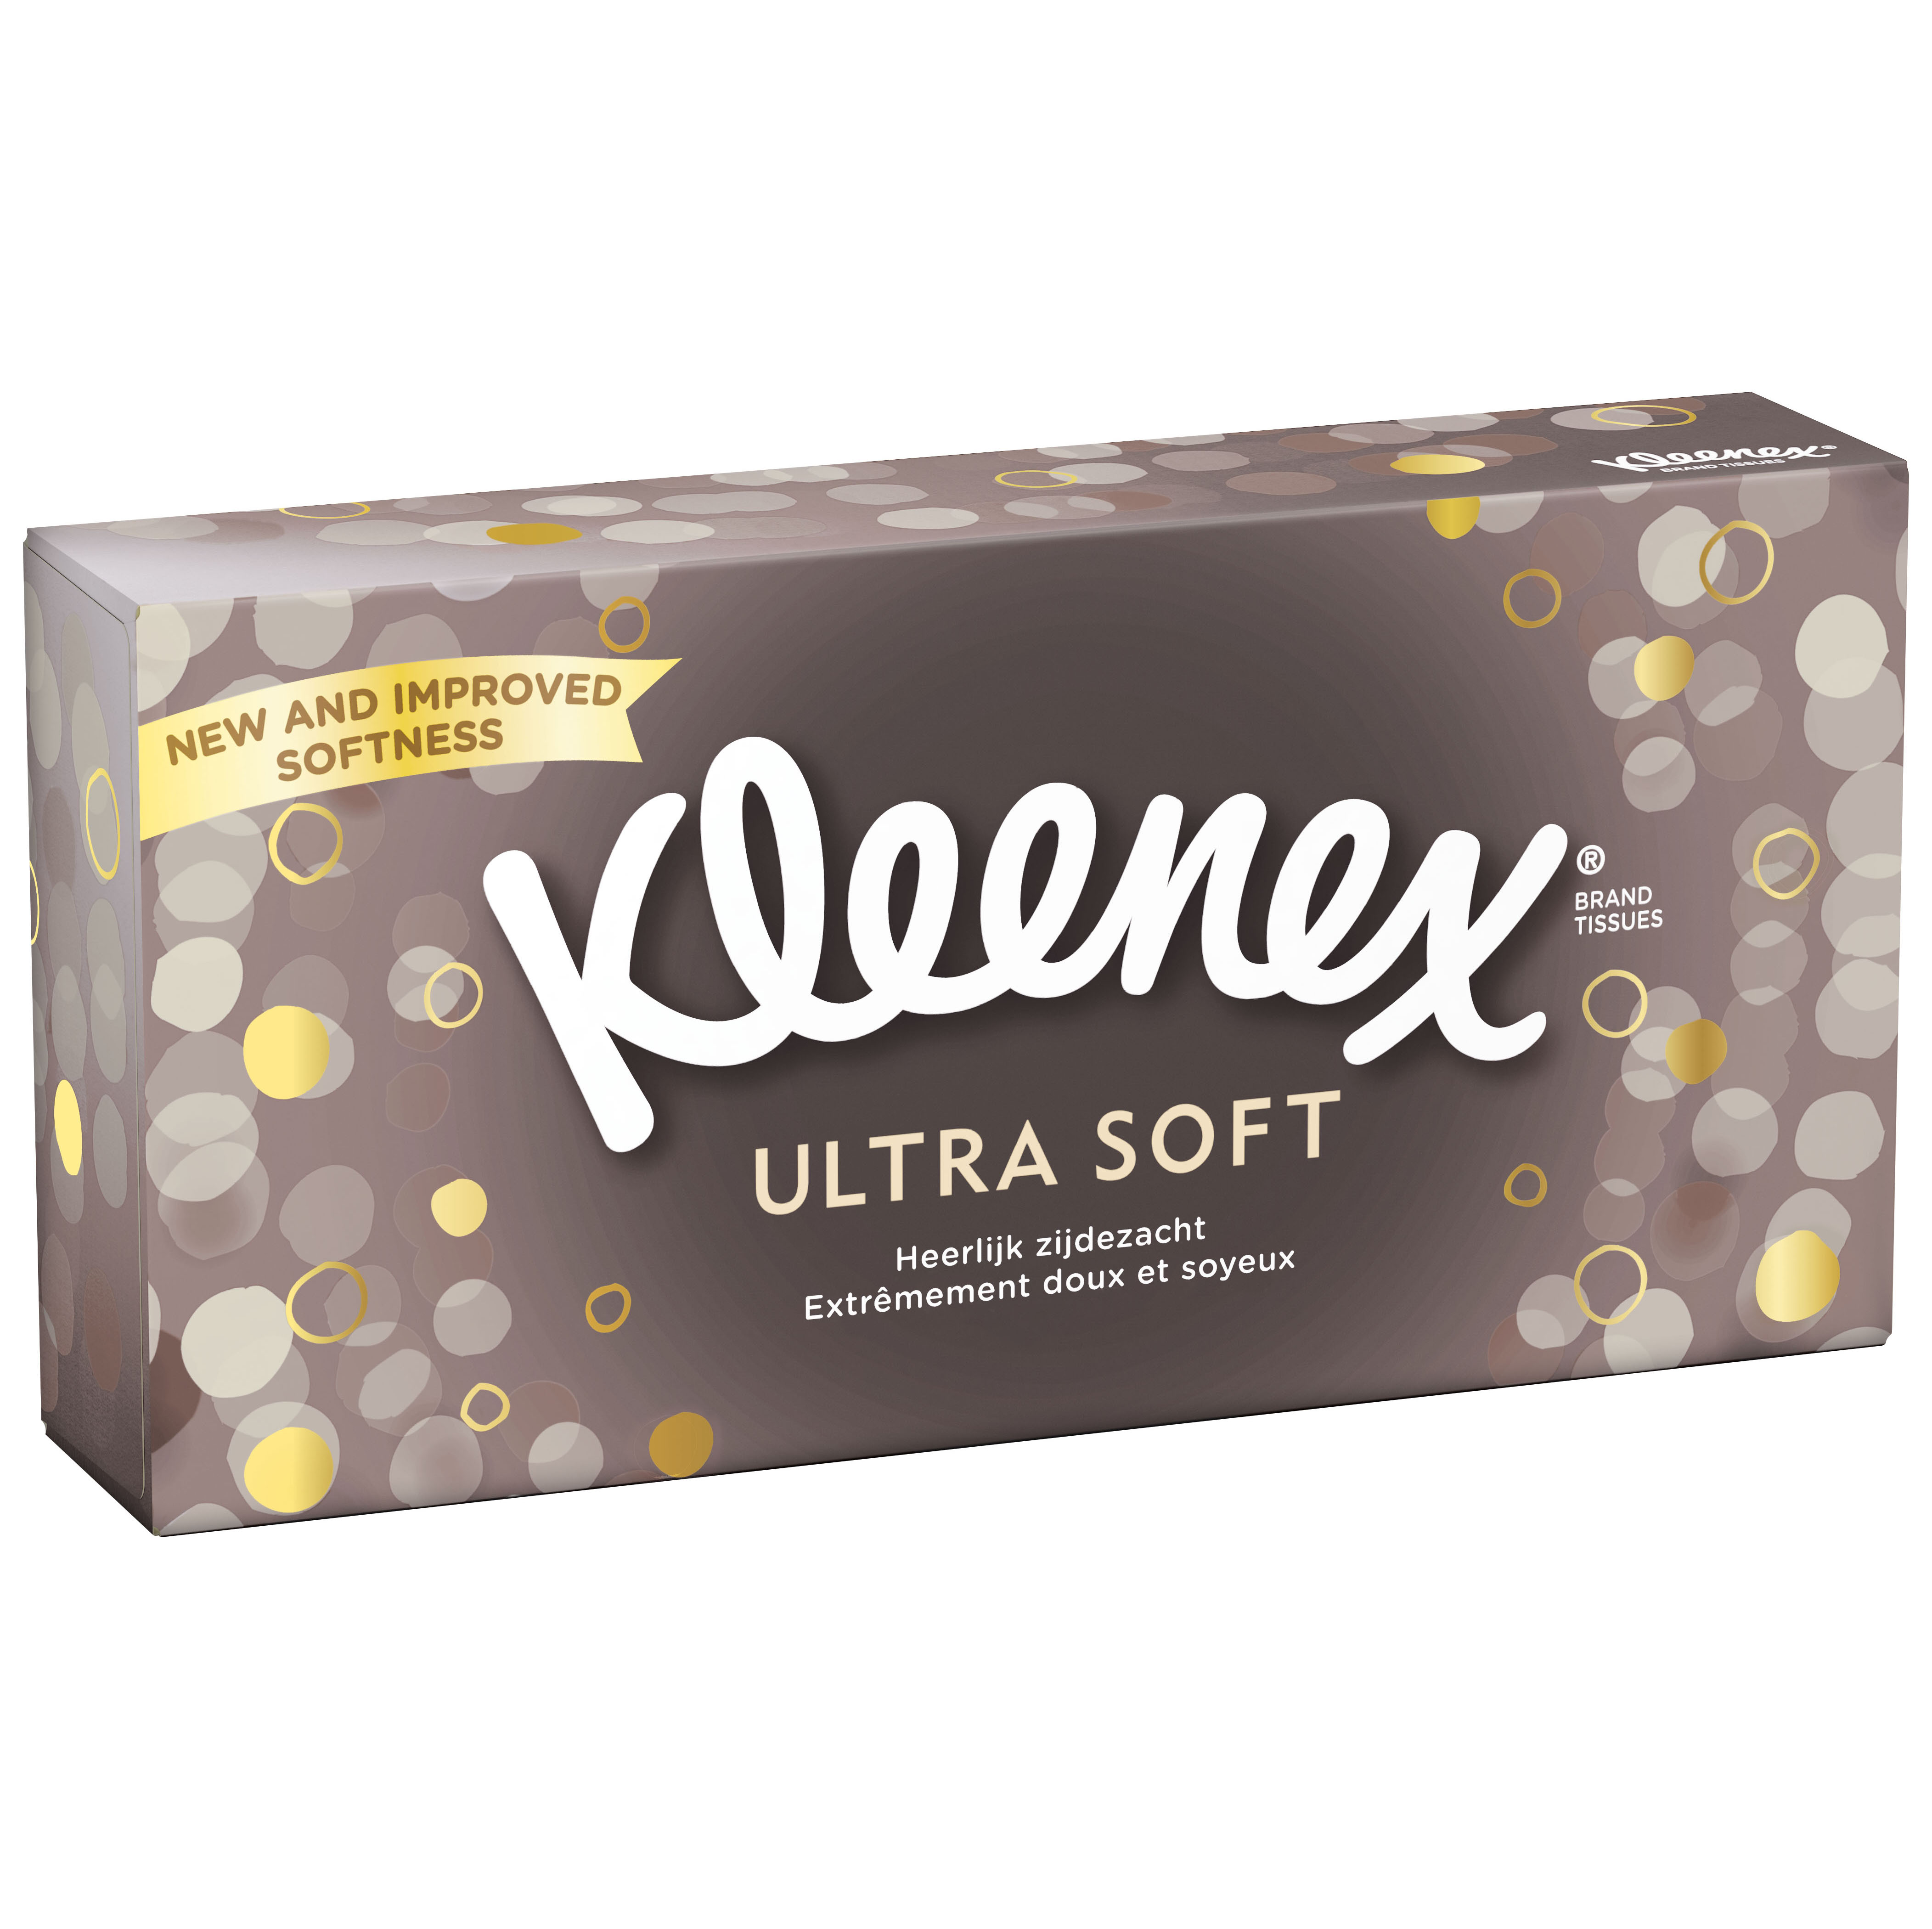 Салфетки Kleenex Ultrasoft в коробке, 72 шт. - фото 1